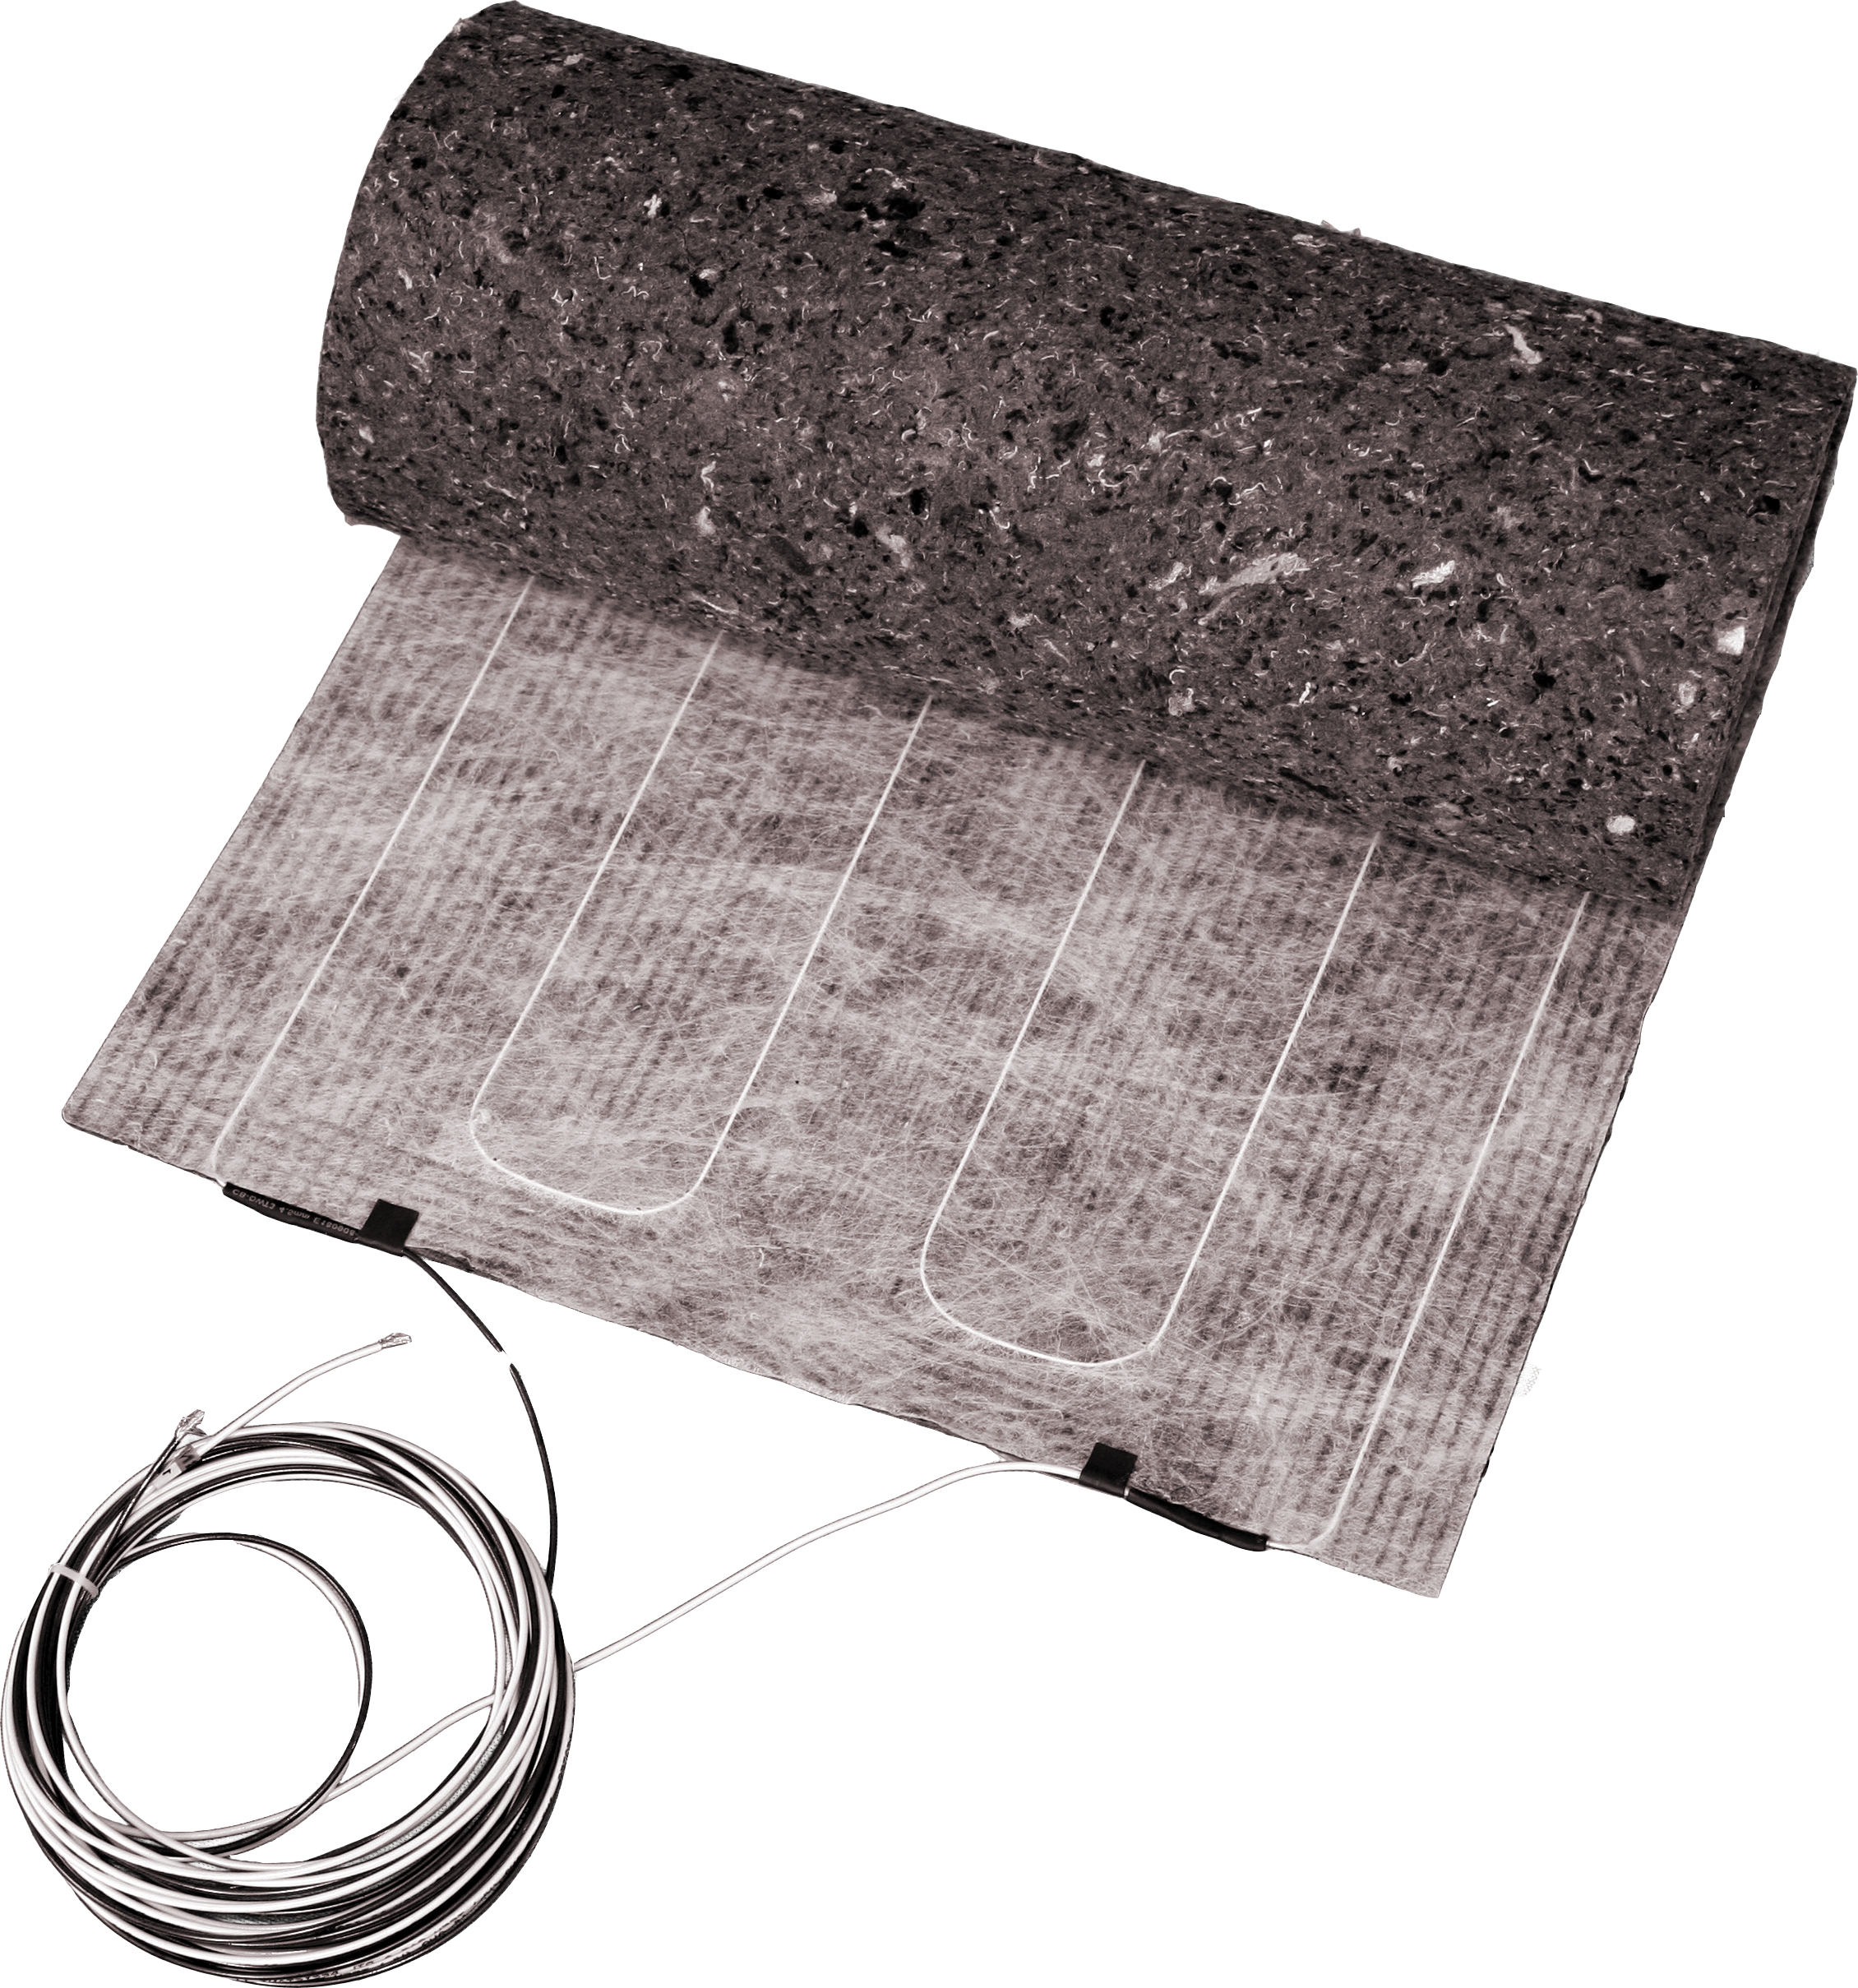 ThermoFloor Floor Heating Pad for Wood & Laminate Floors